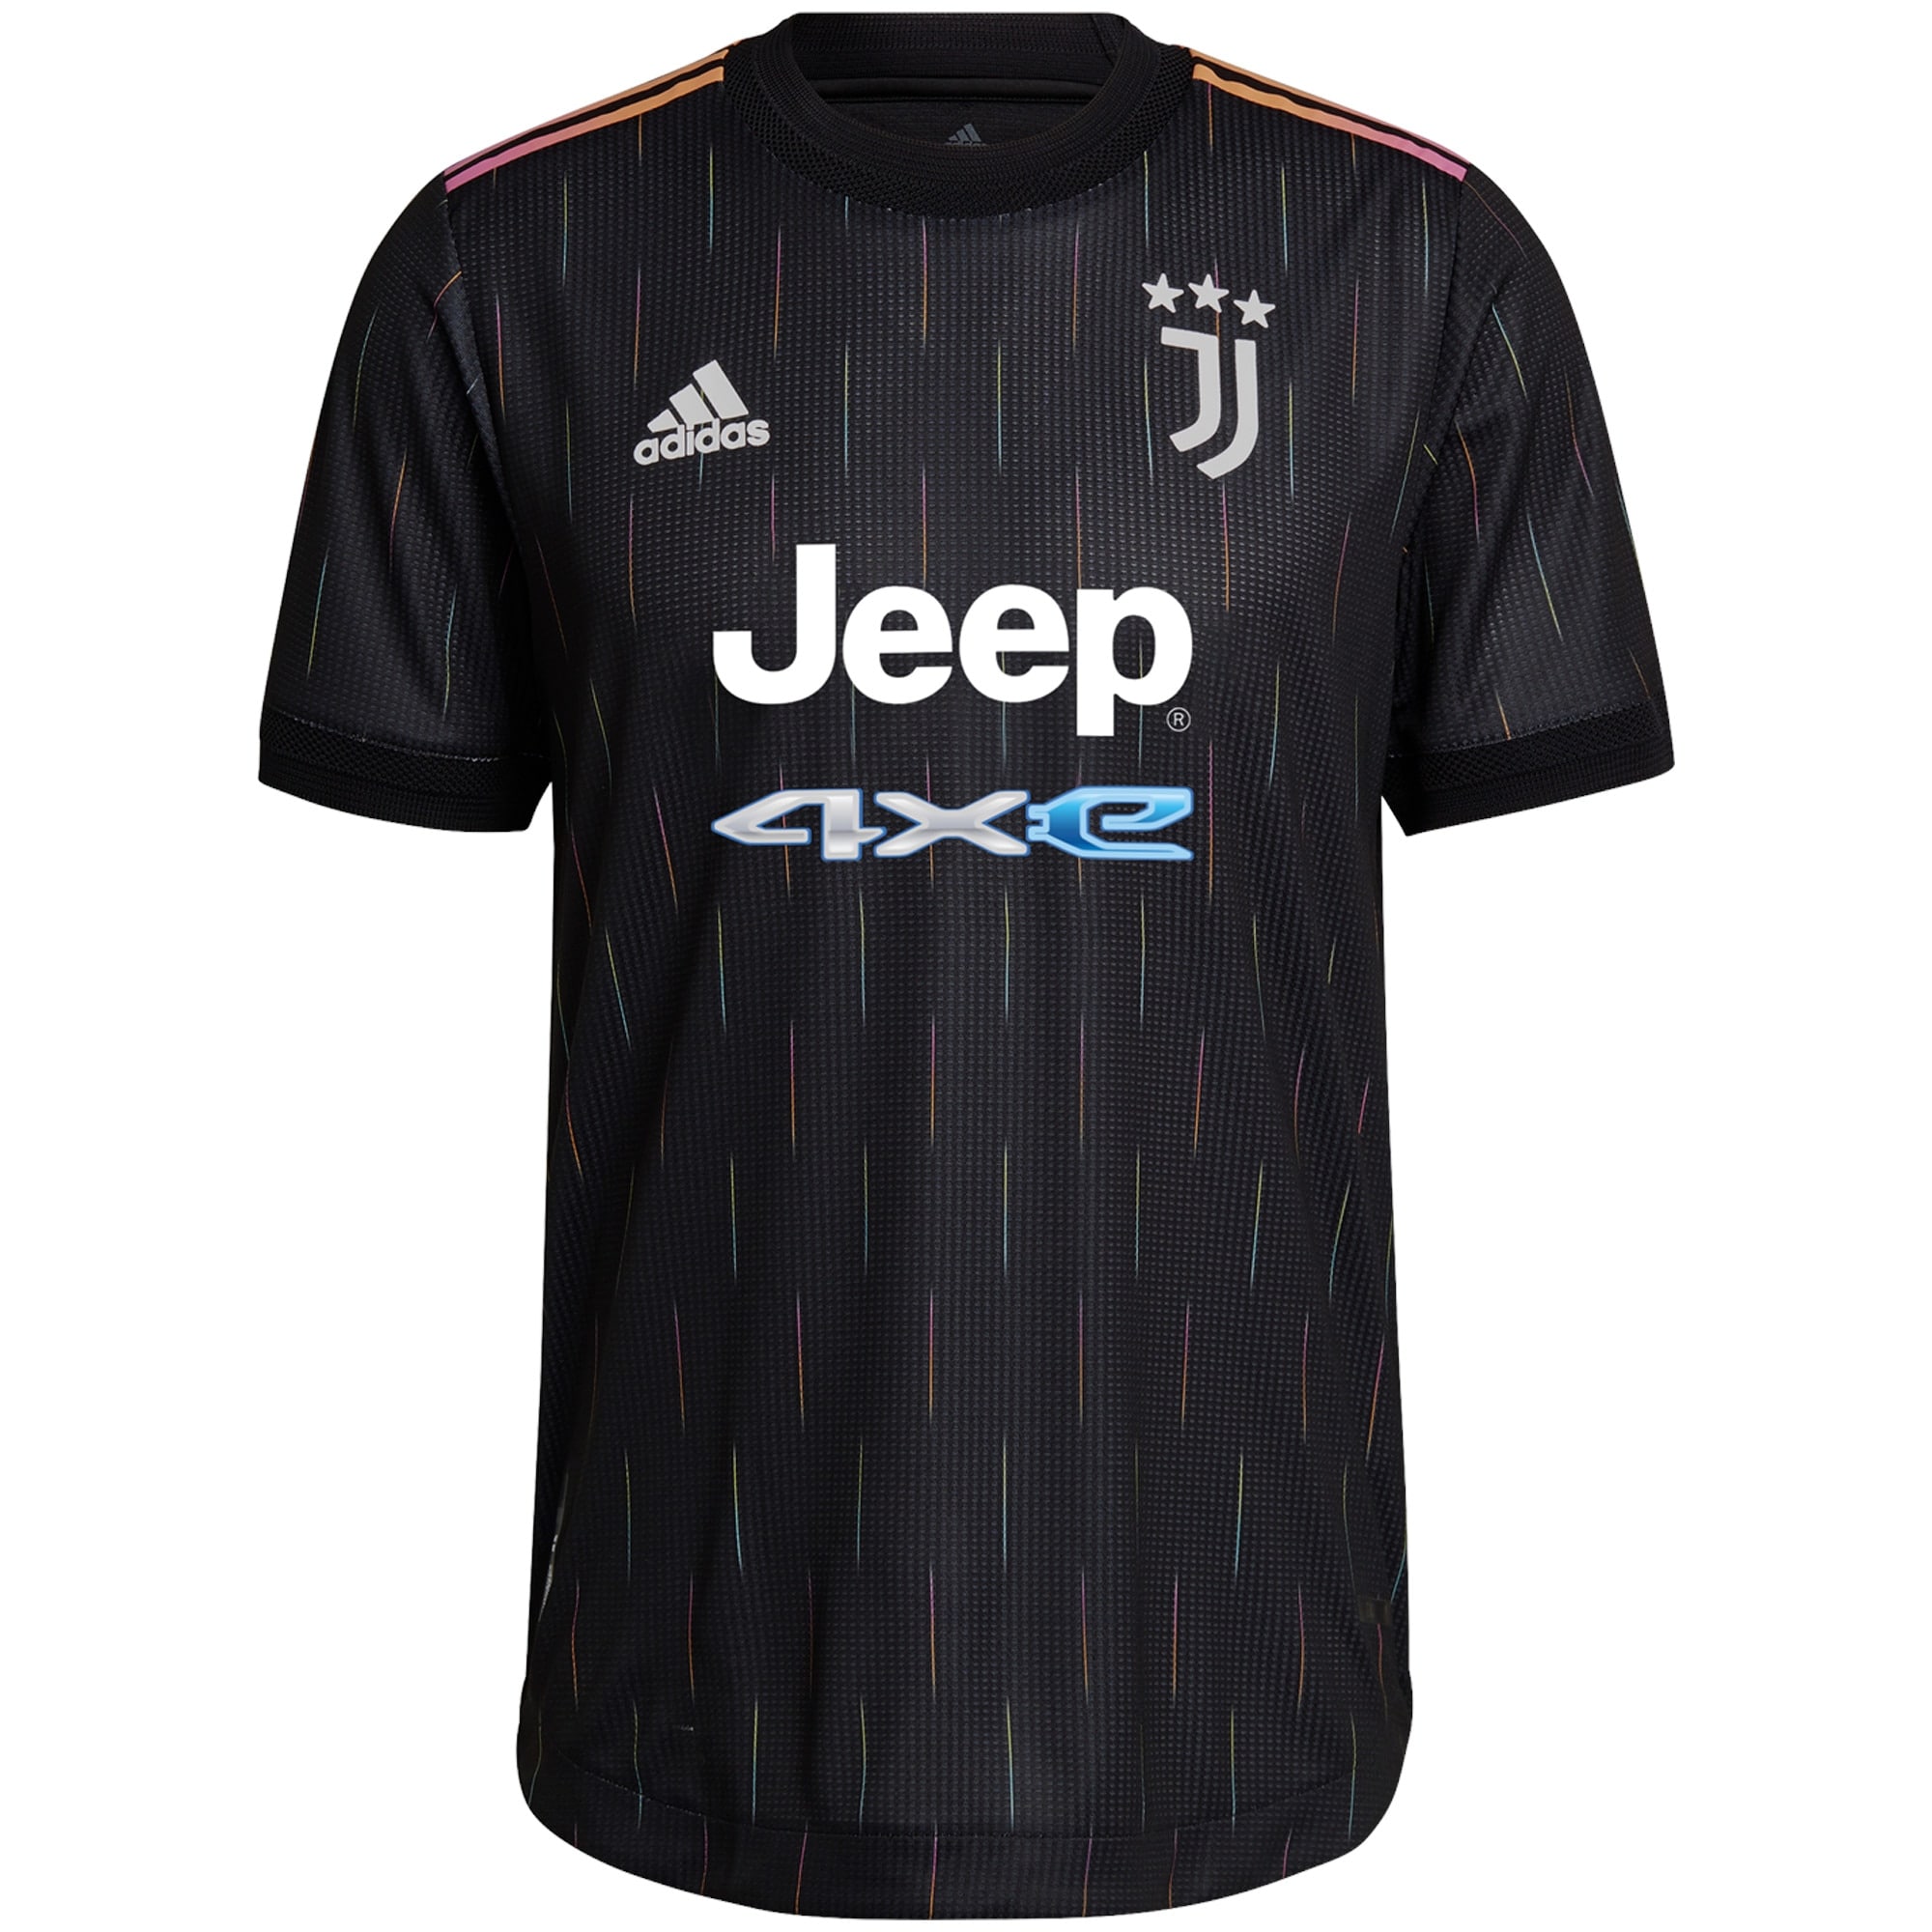 Juventus Away Authentic Shirt 2021-22 with Ramsey 8 printing